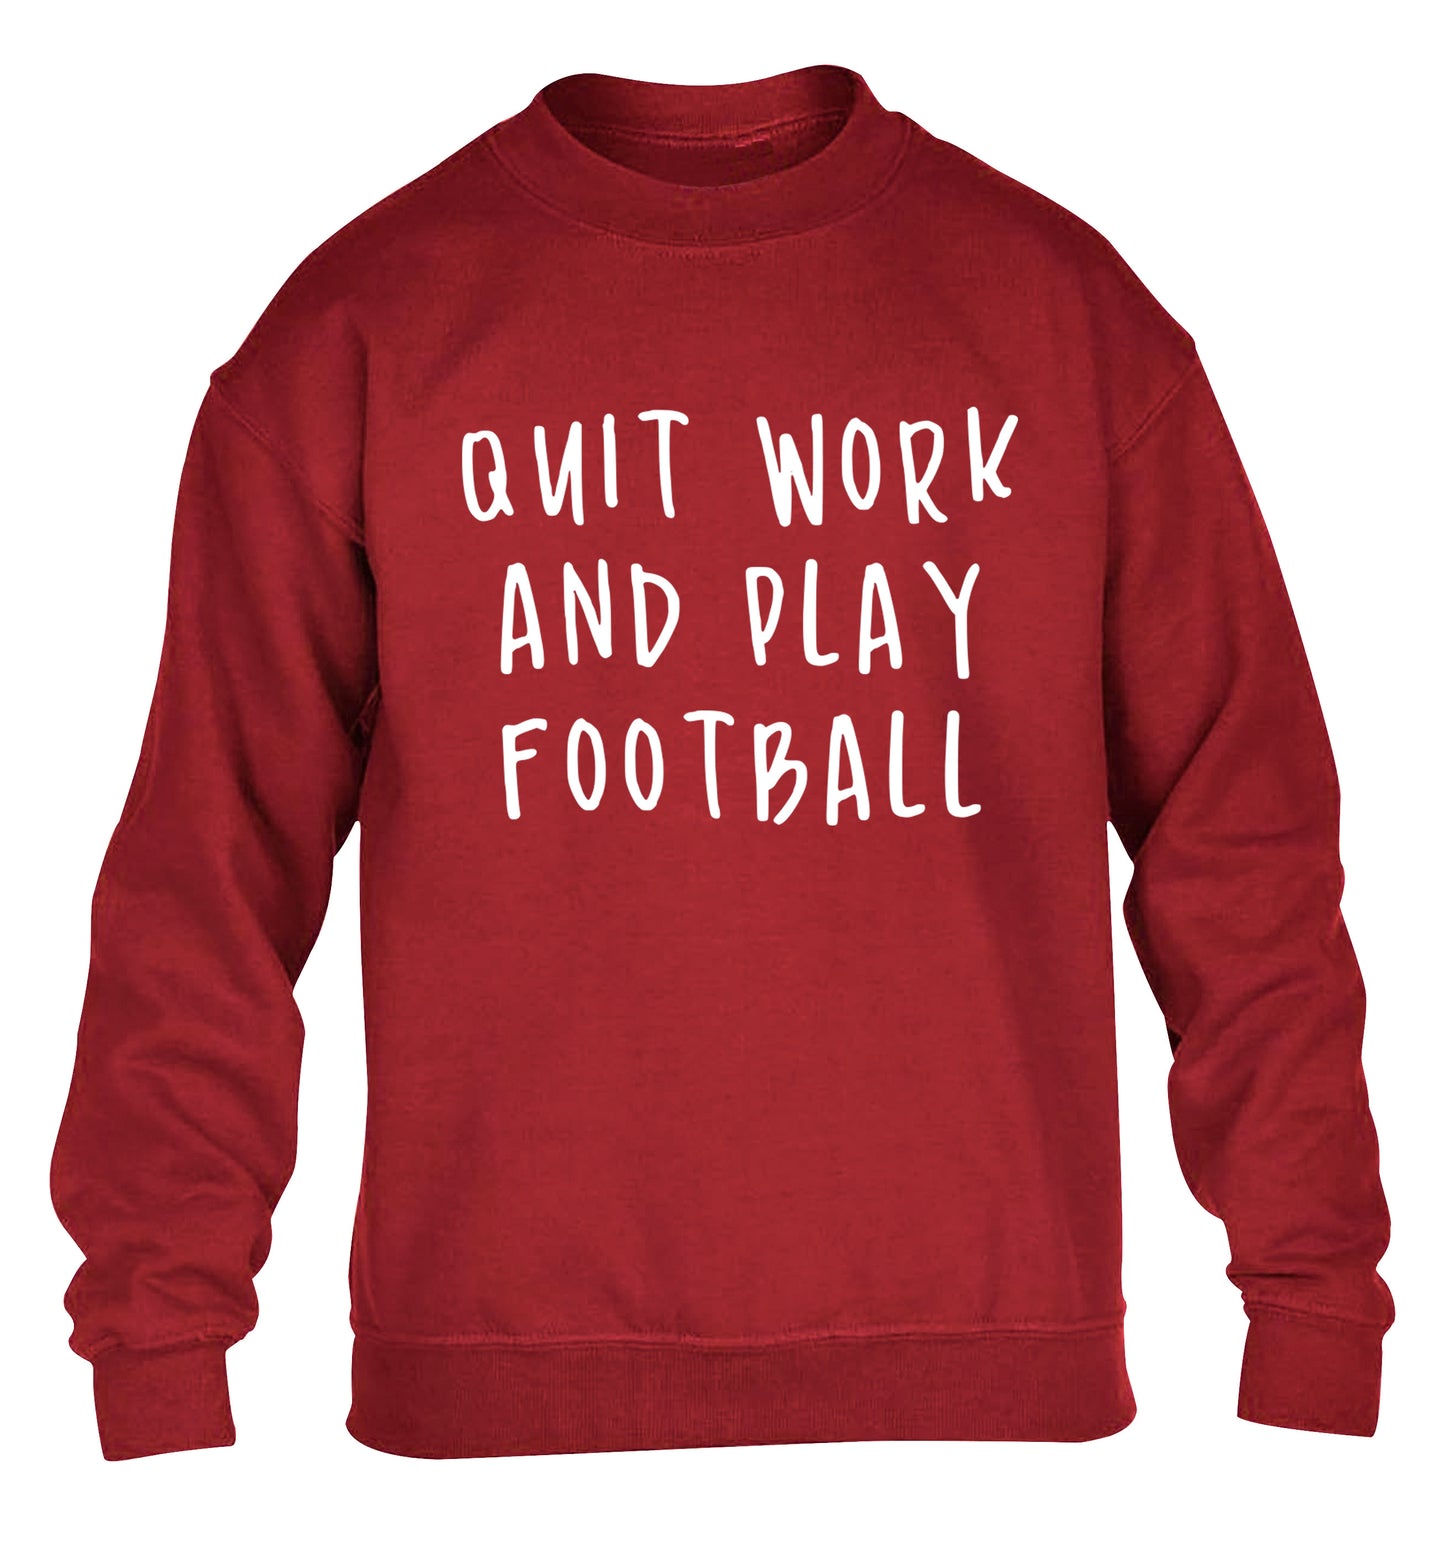 Quit work play football children's grey sweater 12-14 Years